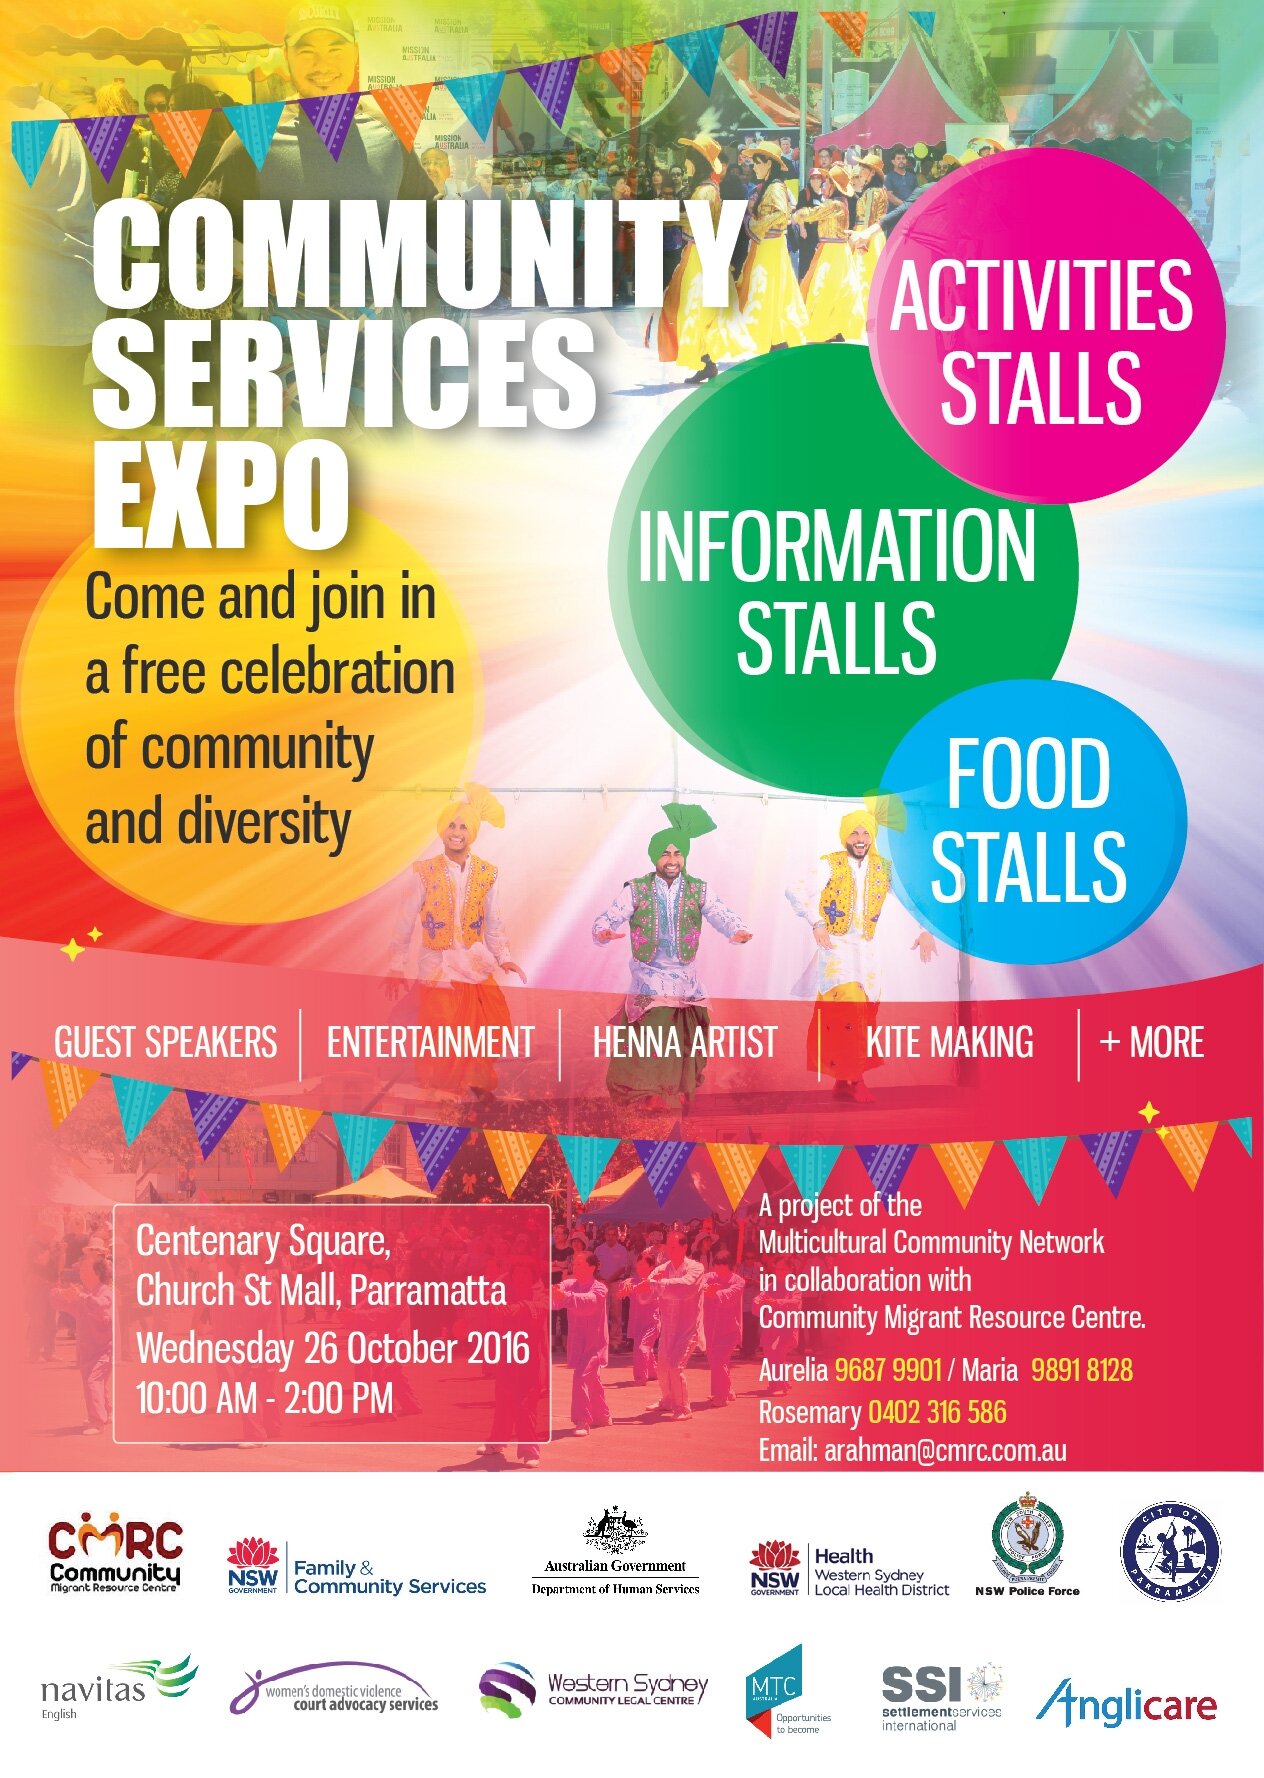 Community Services Expo Flyer 2016.JPG